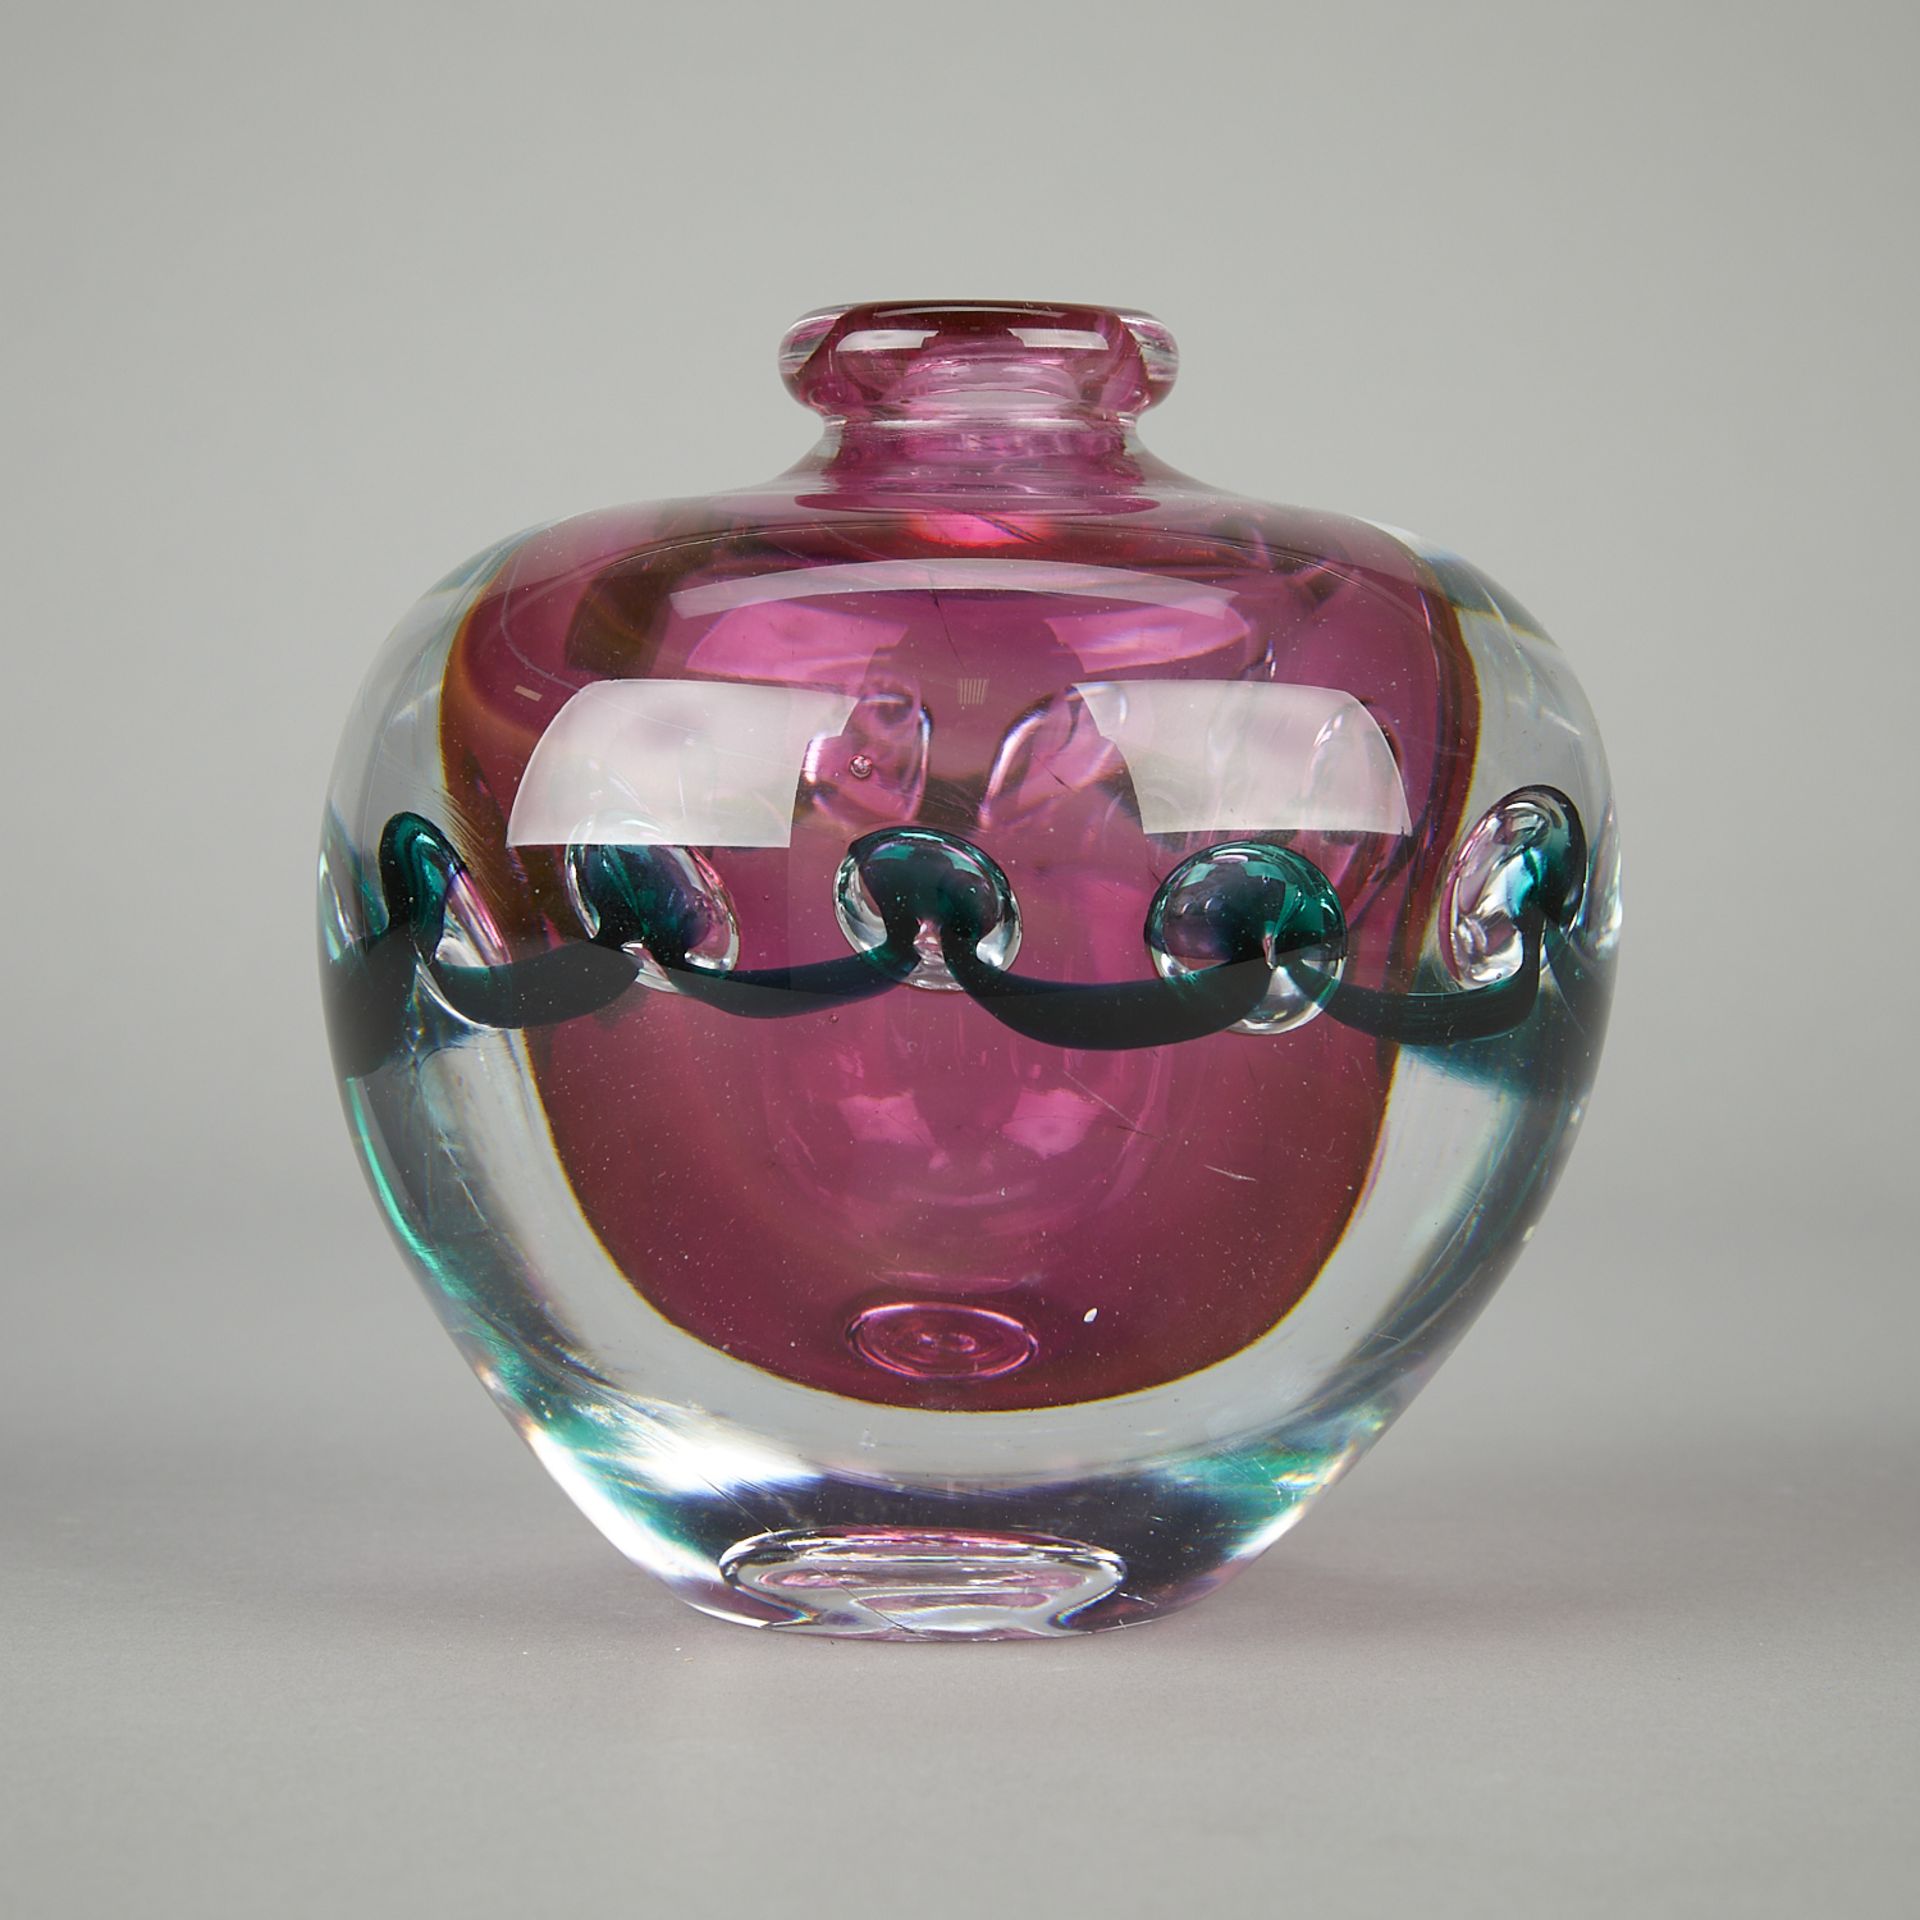 Jean-Claude Novaro Handblown Glass Vase 2000 - Image 4 of 8